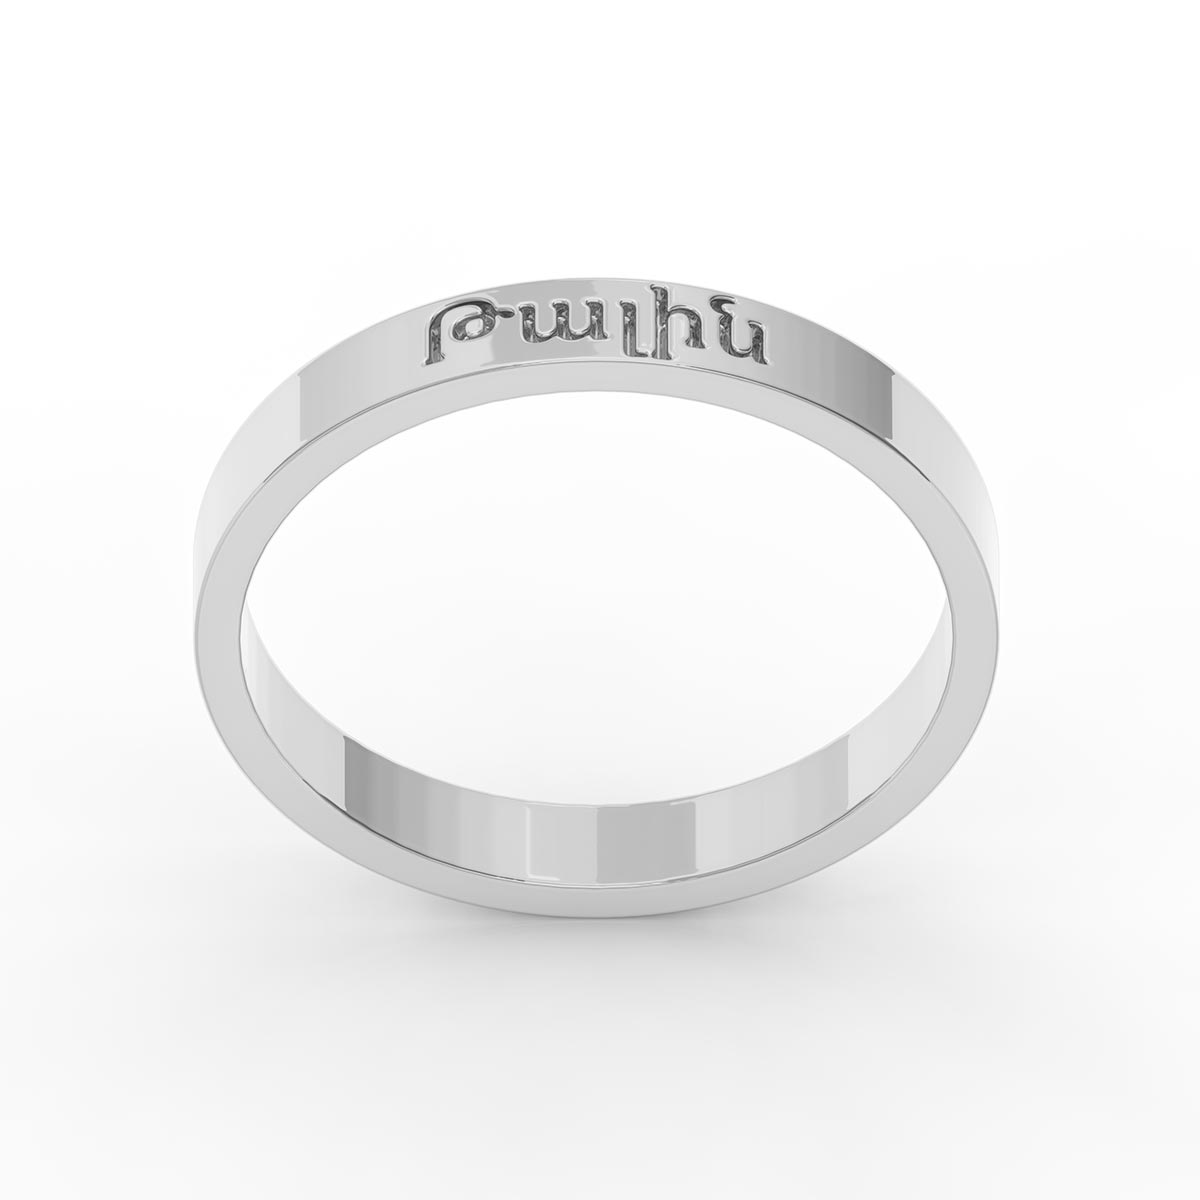 Plain Ring With Armenian Name Engraving